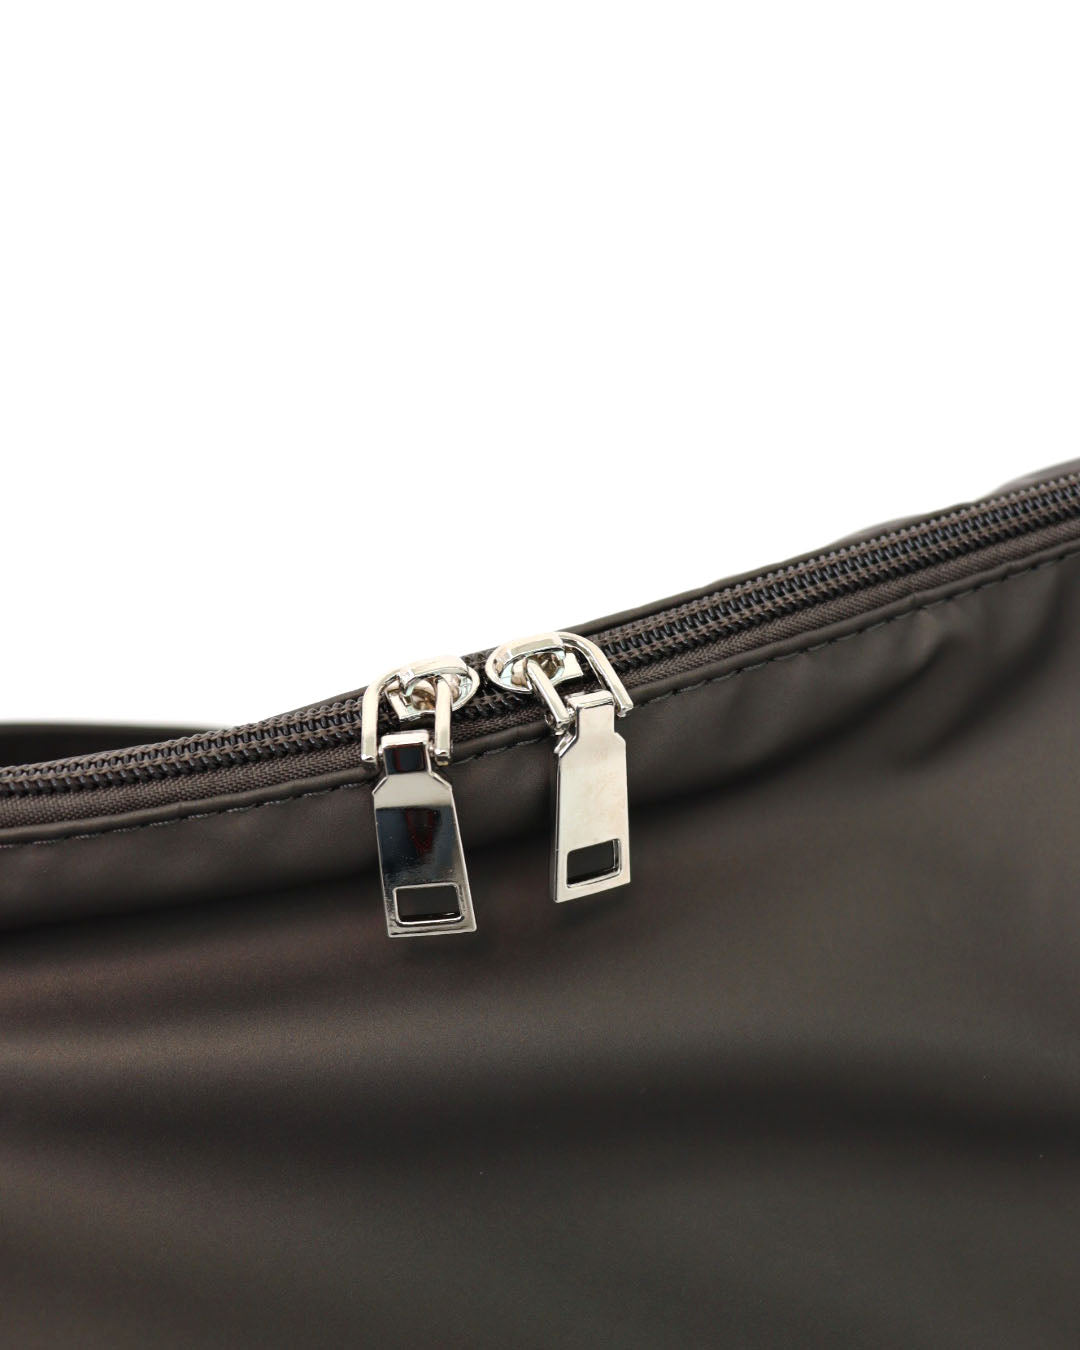 Signature ZZZ Bolster Sling/Shoulder Bag in Metallic Carbon